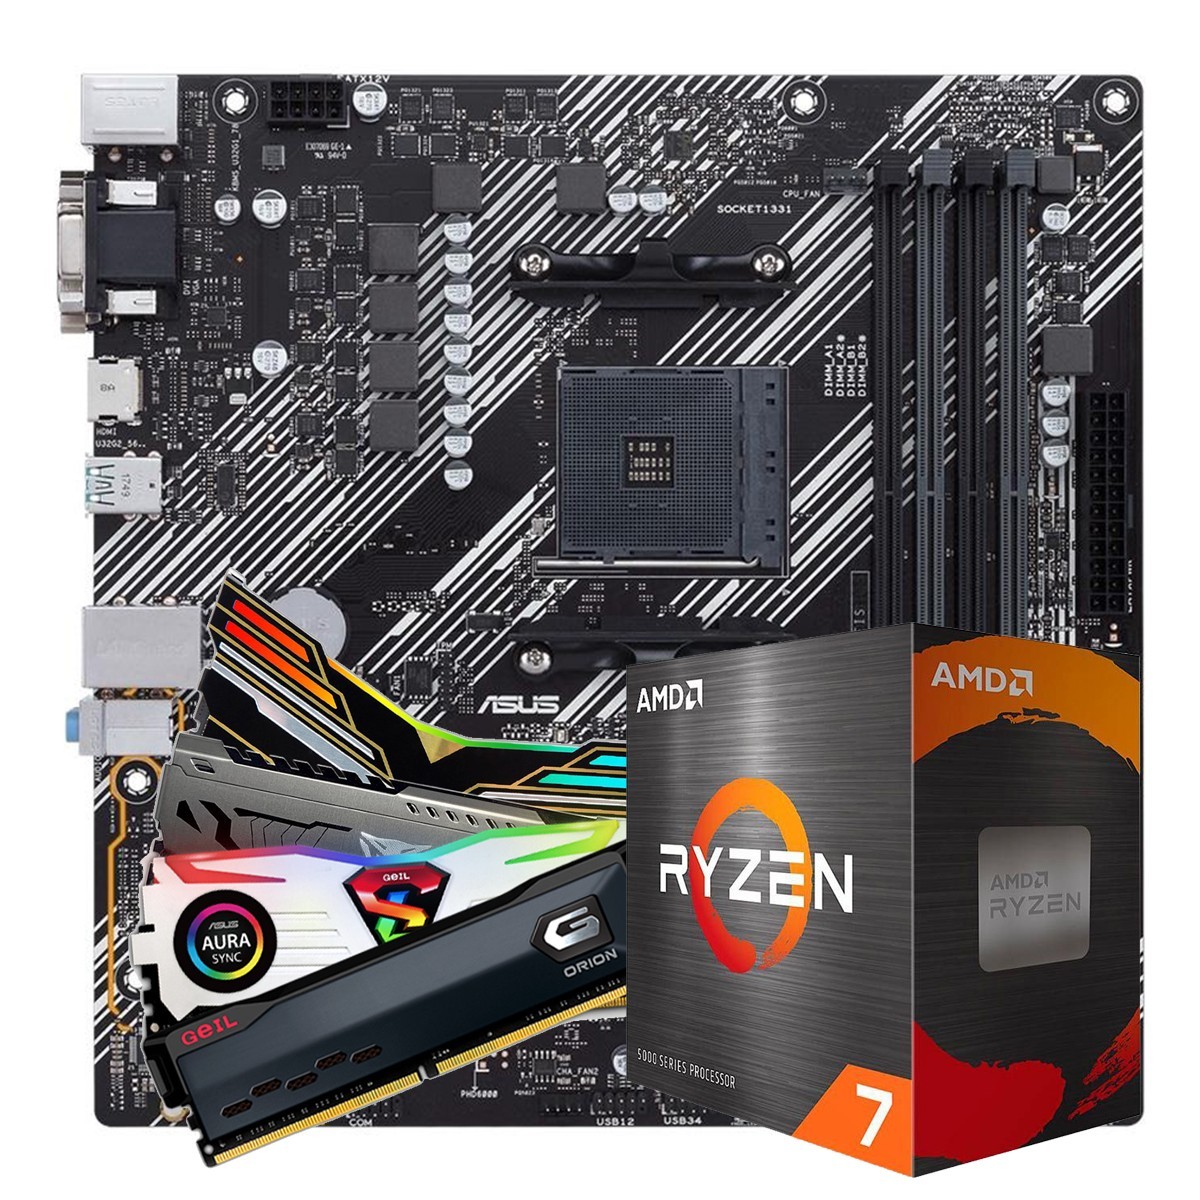 Kit Upgrade, AMD Ryzen 7 5700G, Placa Mãe B550, Memória DDR4 8GB 3000MHz